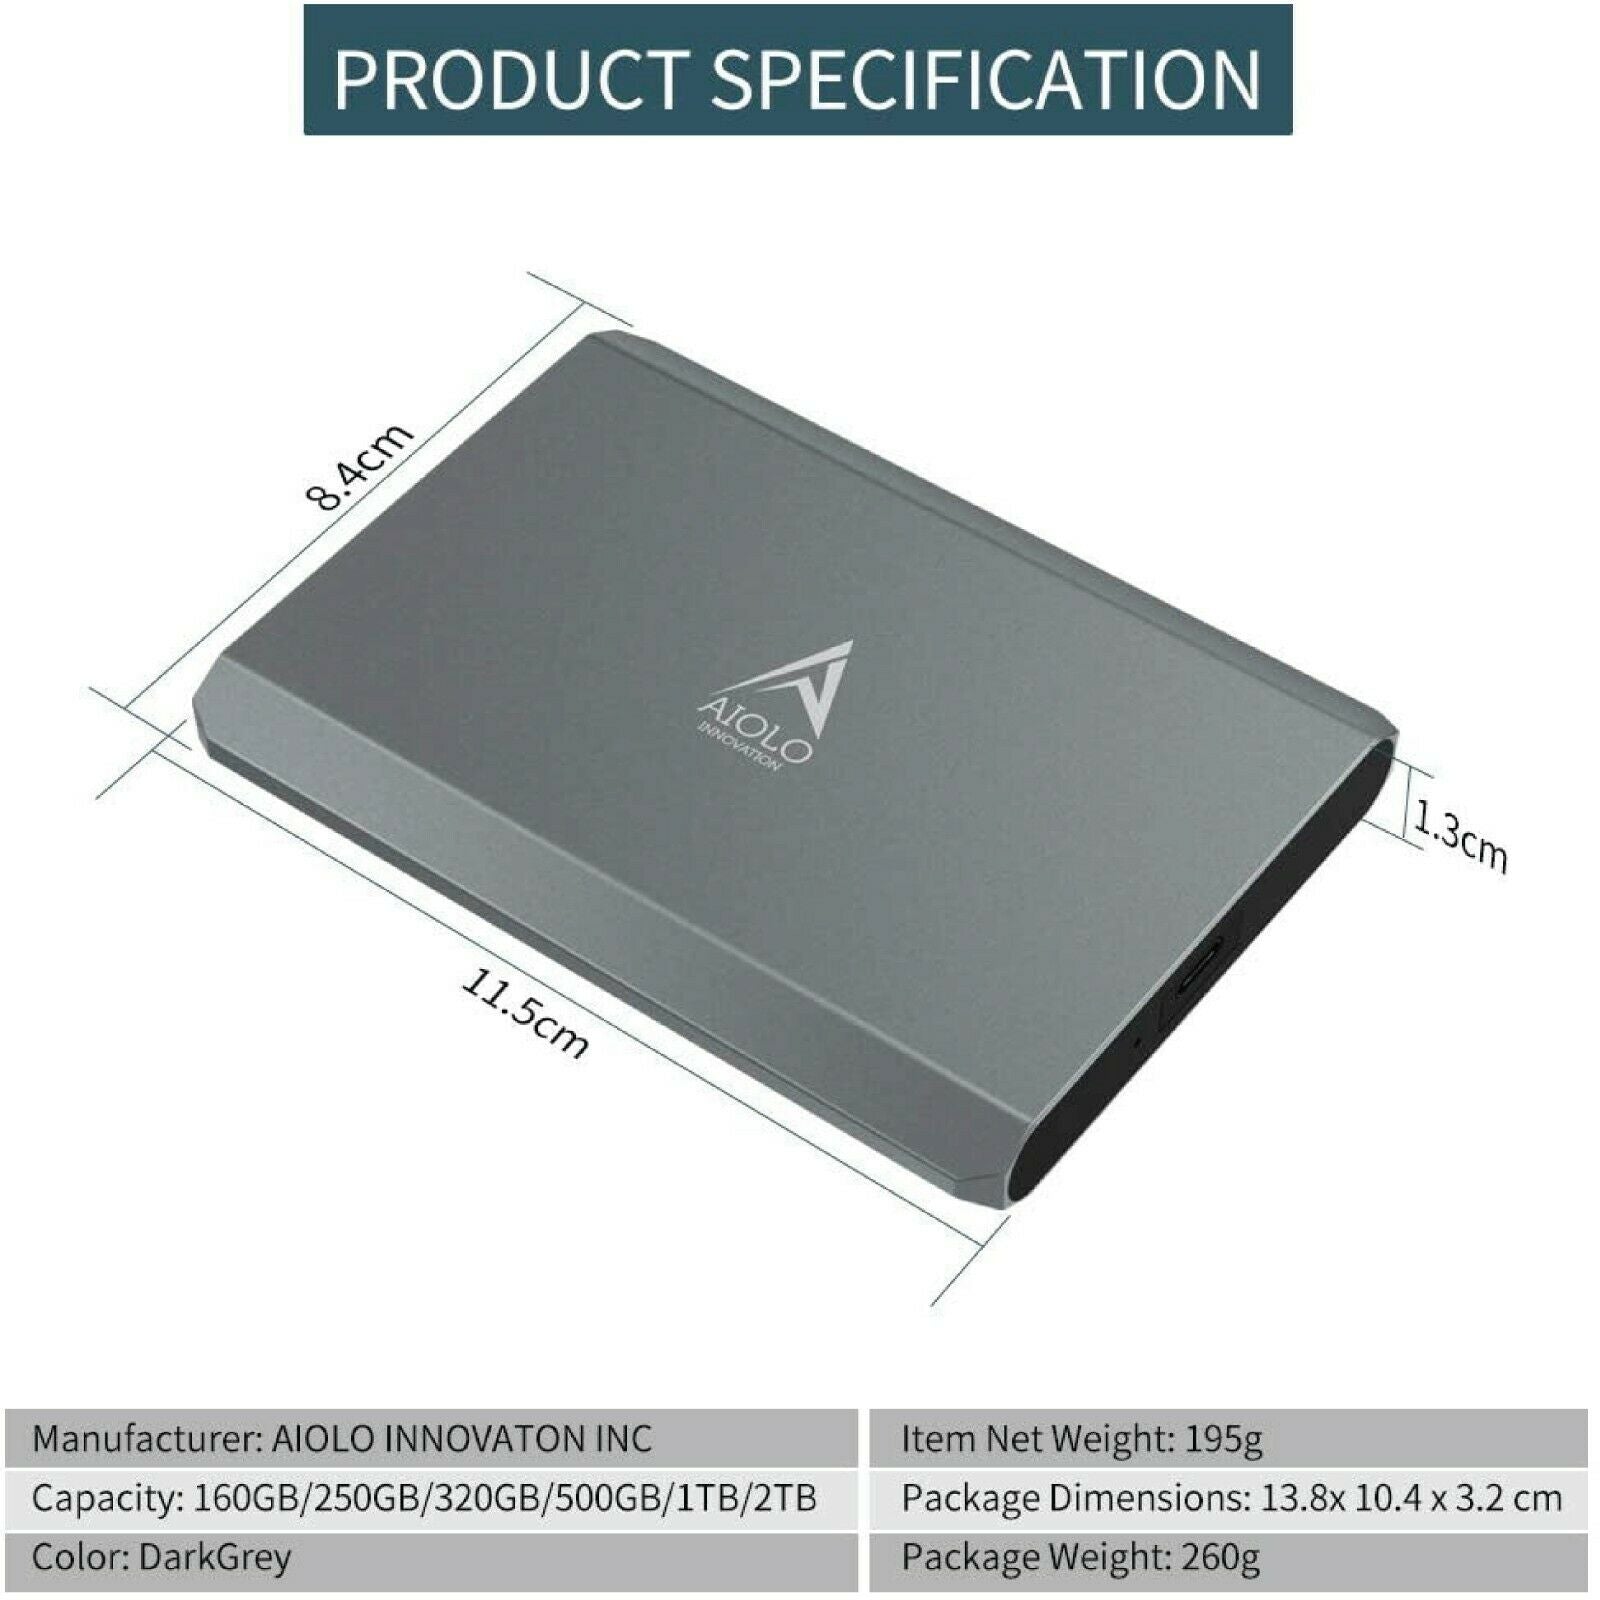 AIOLO 2.5" Portable External Hard Drive USB 3.0 HDD Storage for PC, Mac, Laptop